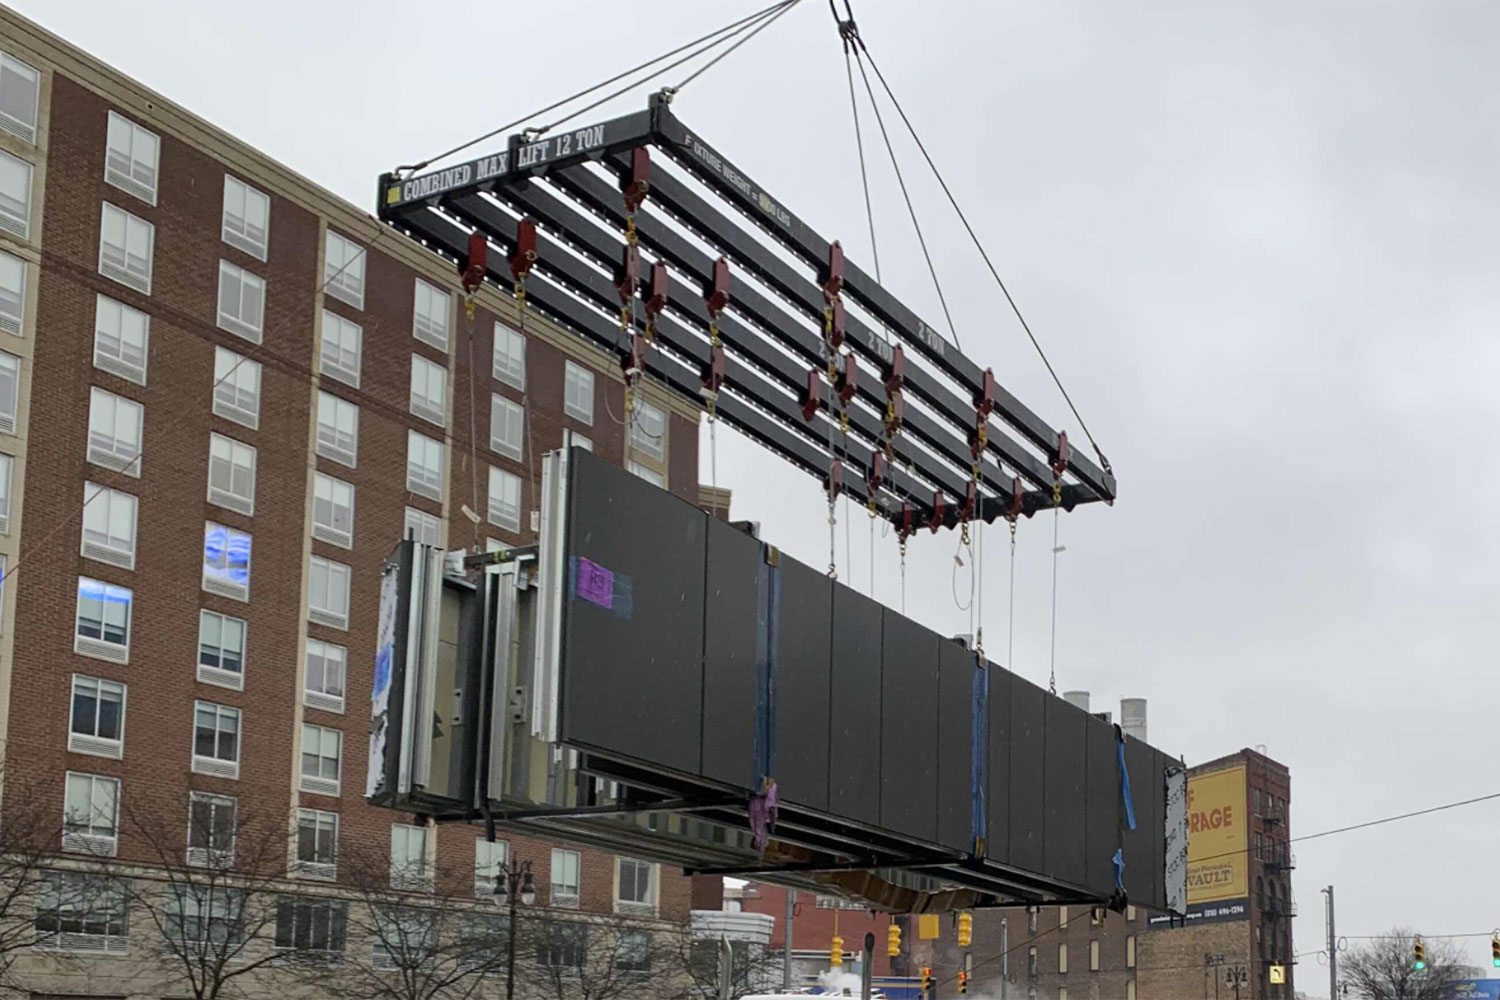 12-ton Lifting Bridle lifting a metal beam at a construction site